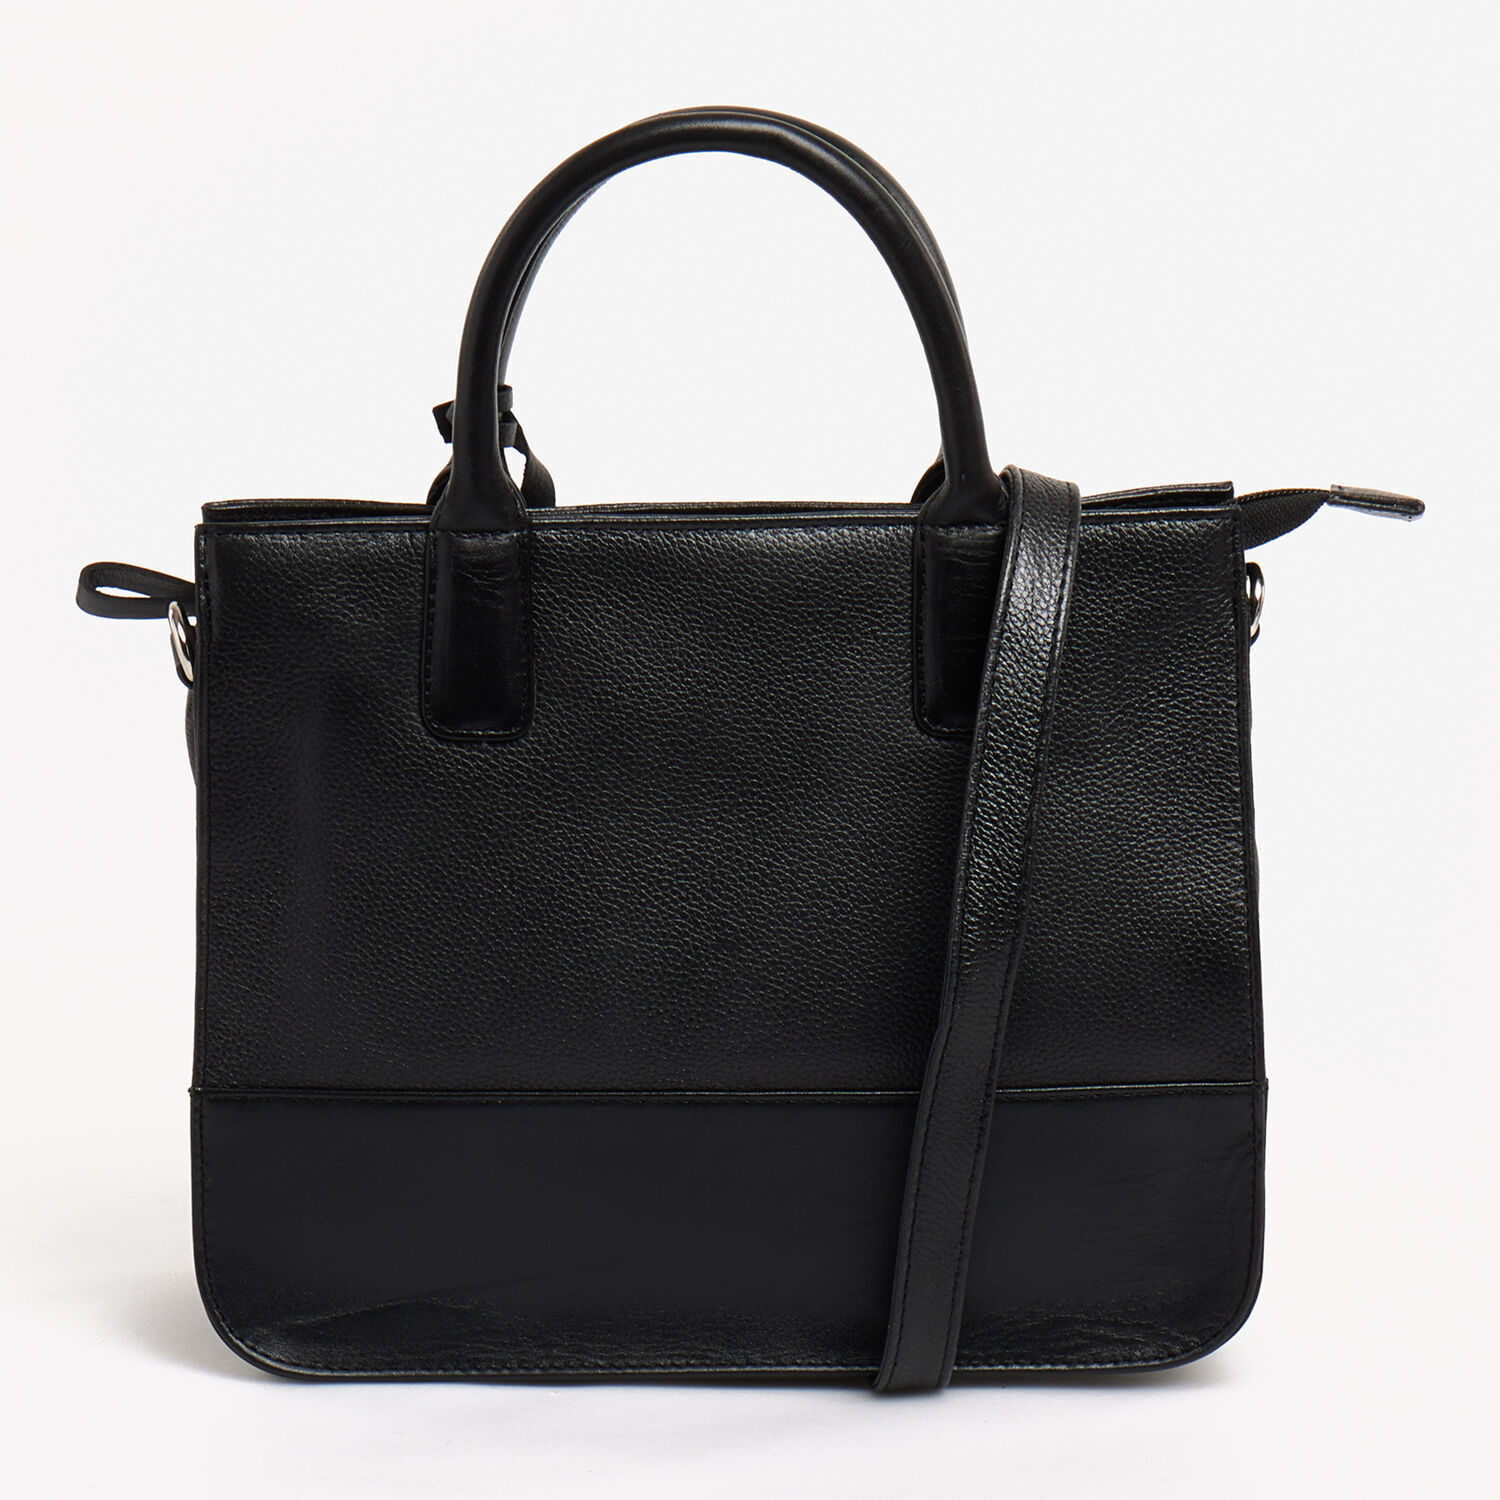 Black Handbags - Women's Black Handbags - TK Maxx UK